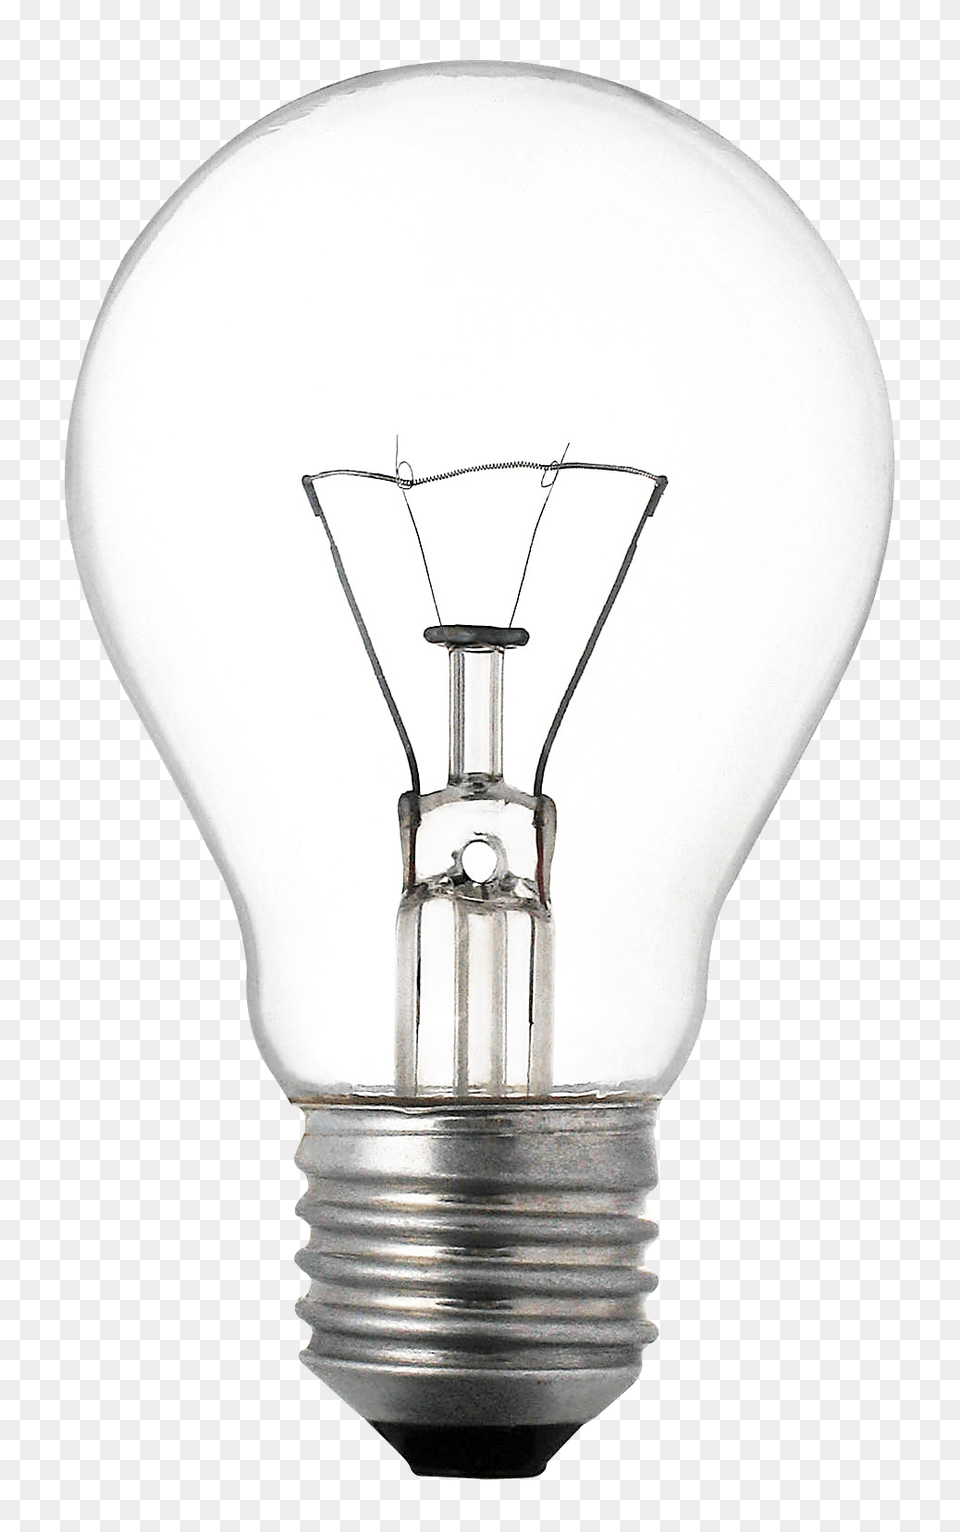 Pngpix Com Light Bulb Transparent Image, Lightbulb, Smoke Pipe Png